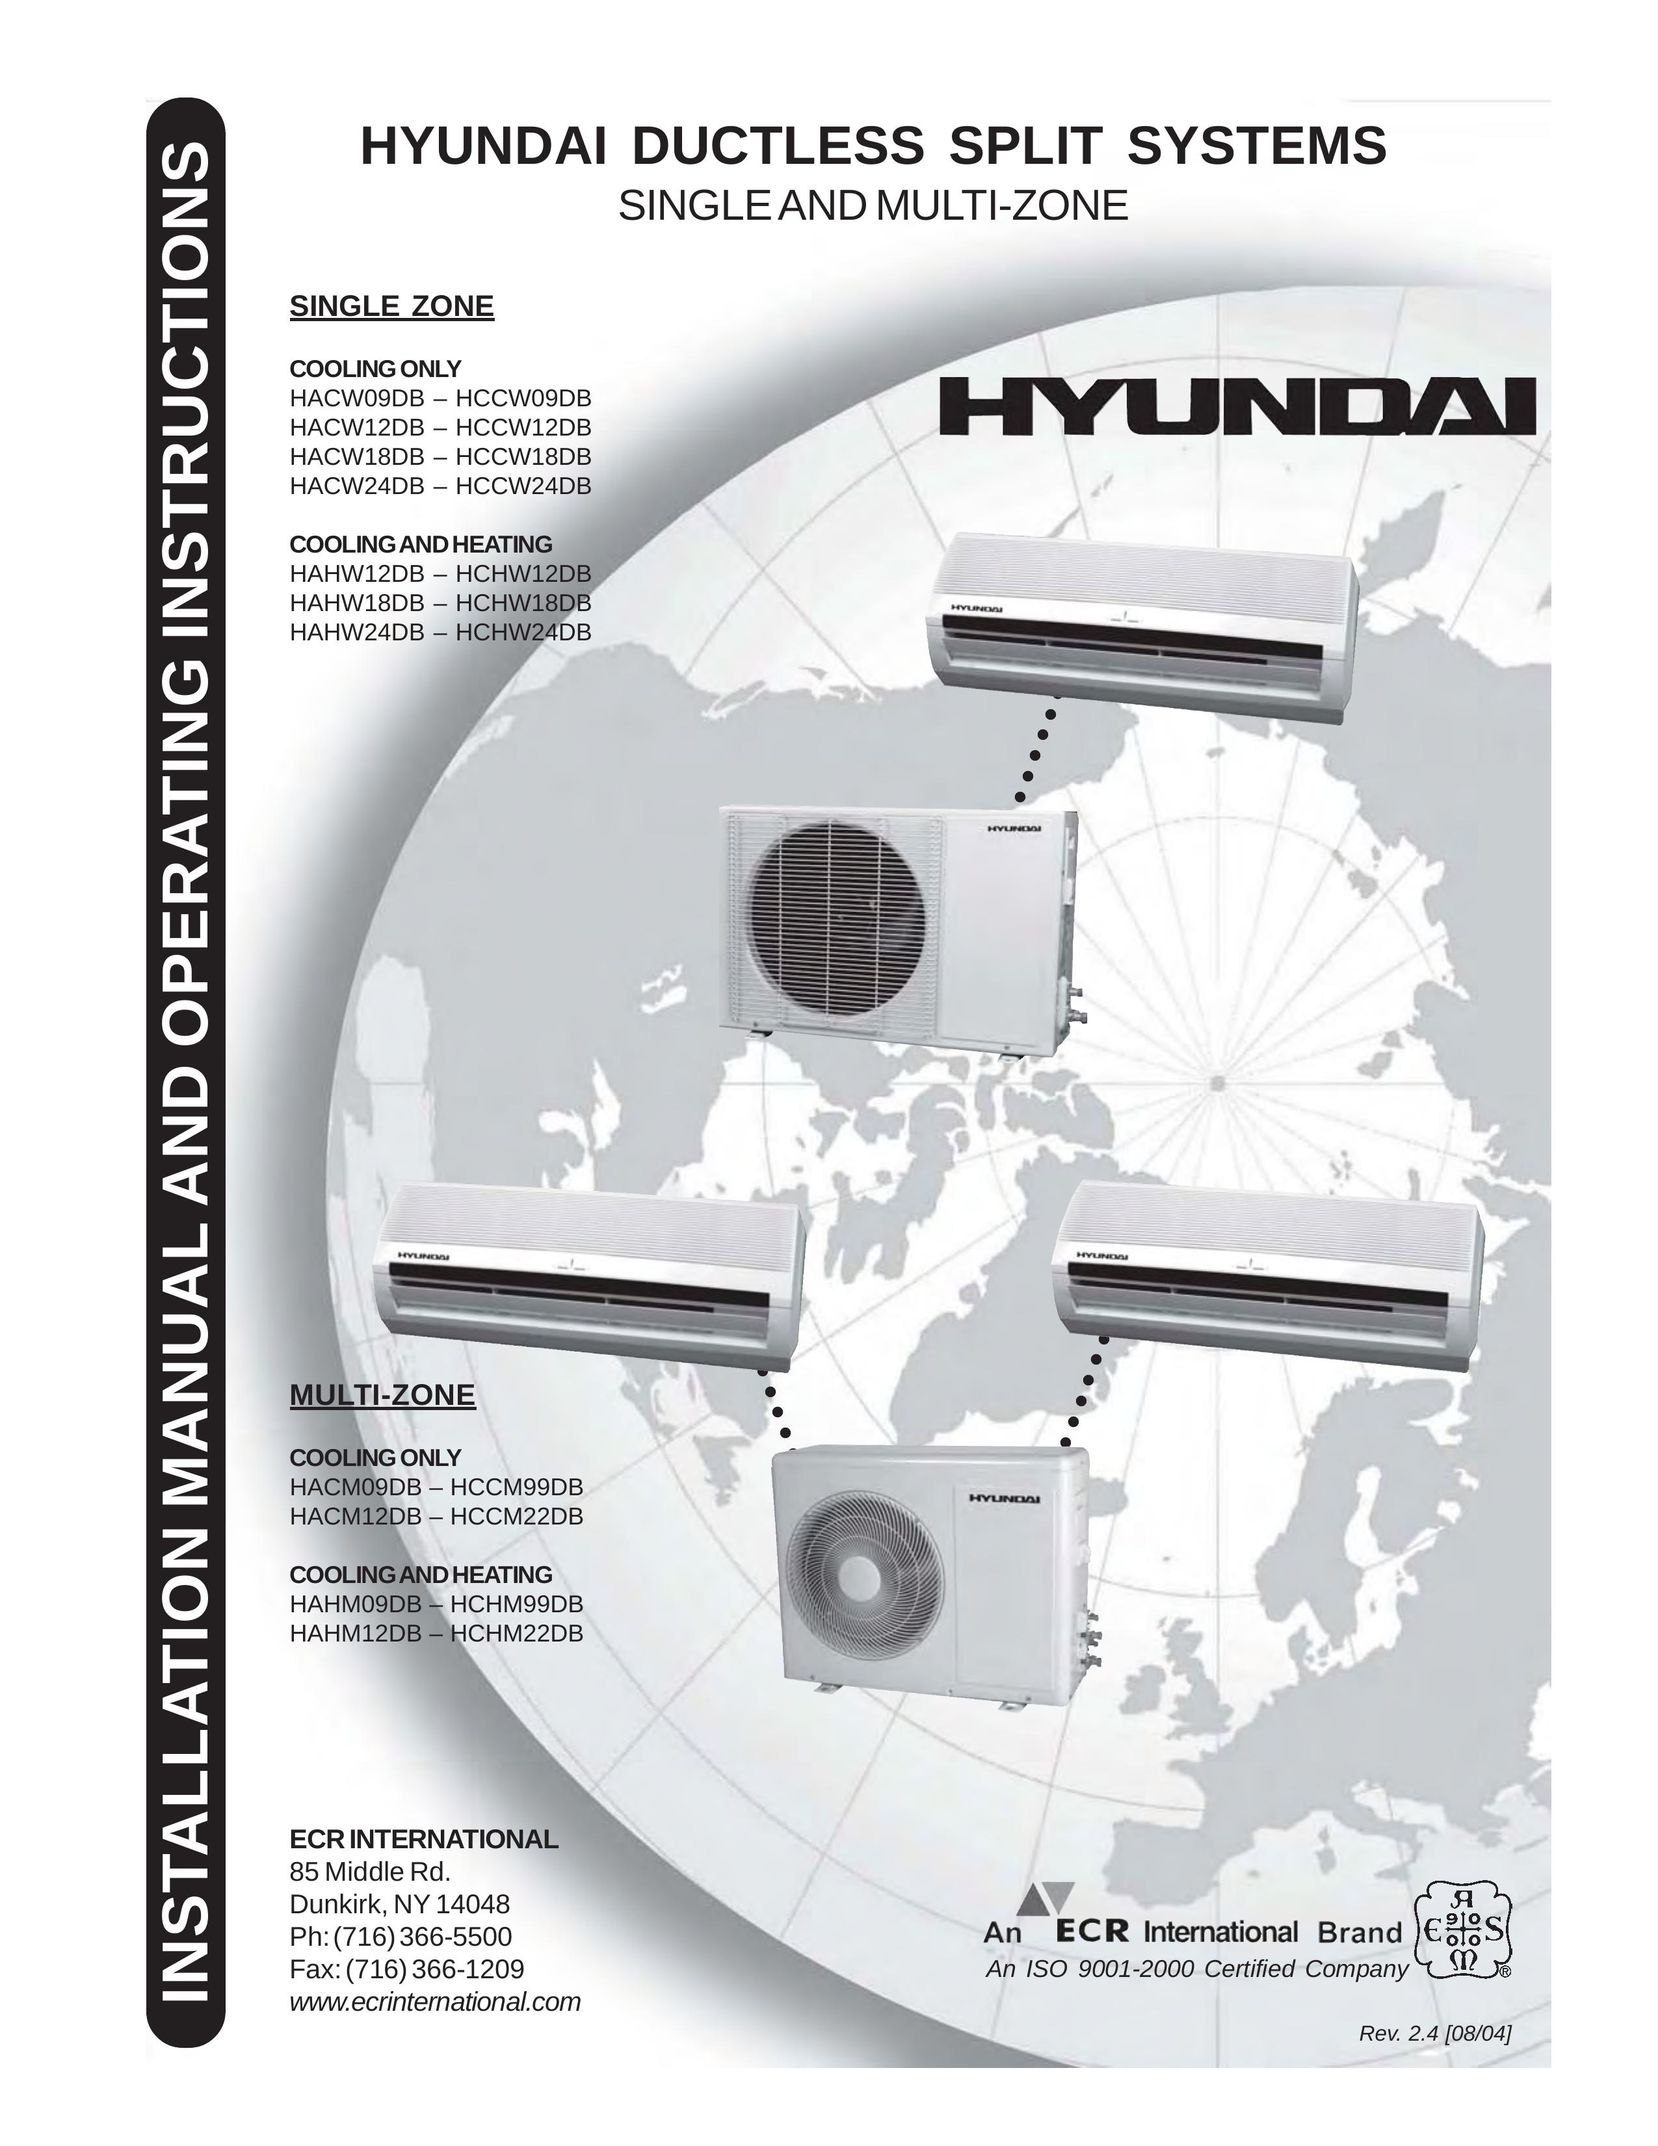 Hyundai HACW24DB - HCCW24DB Air Conditioner User Manual